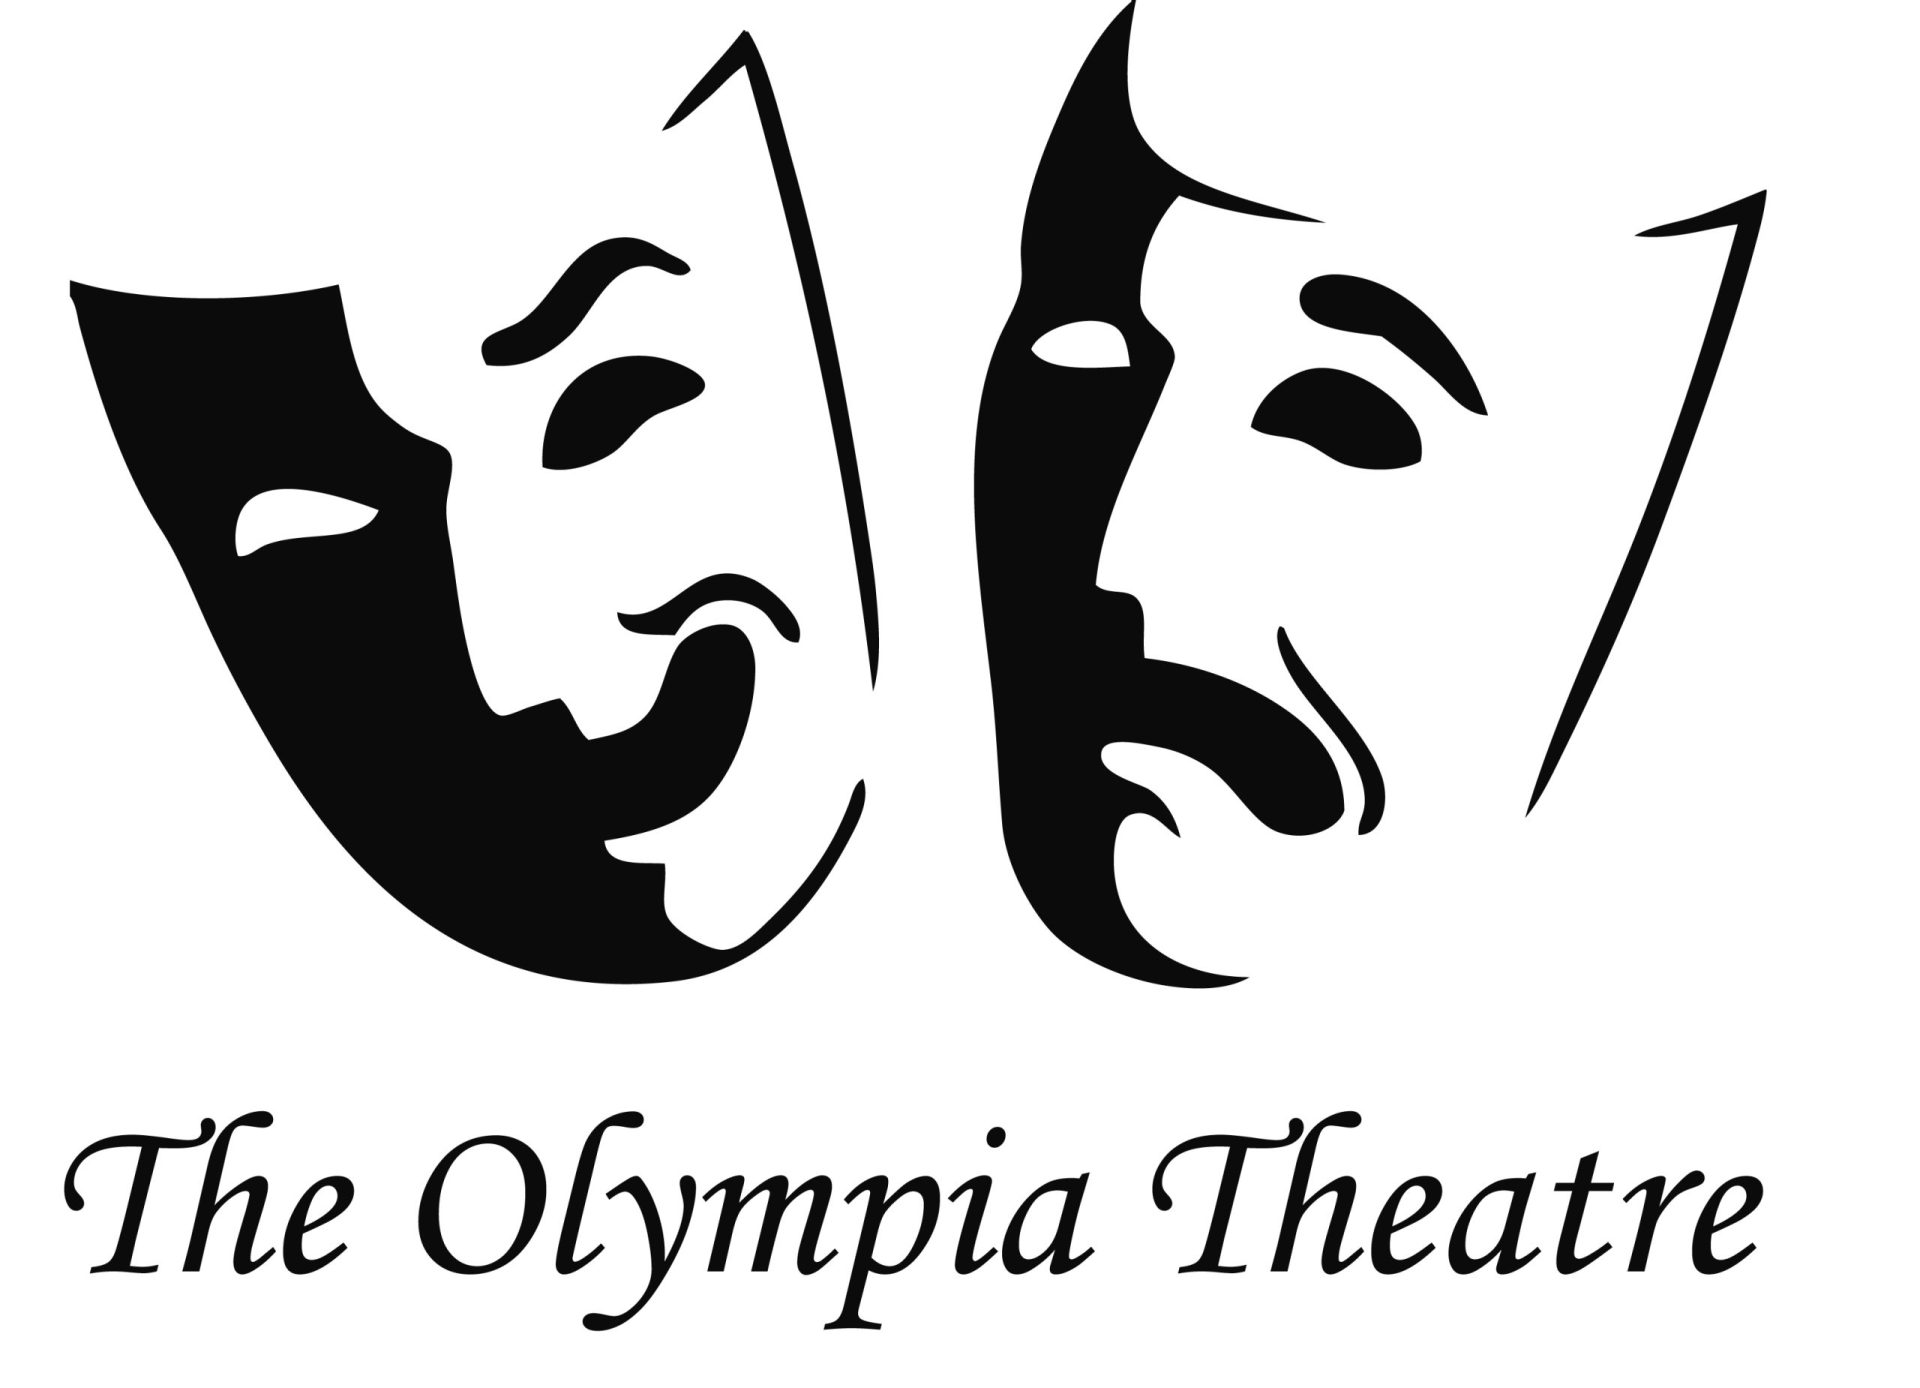 theatre logo ideas 2